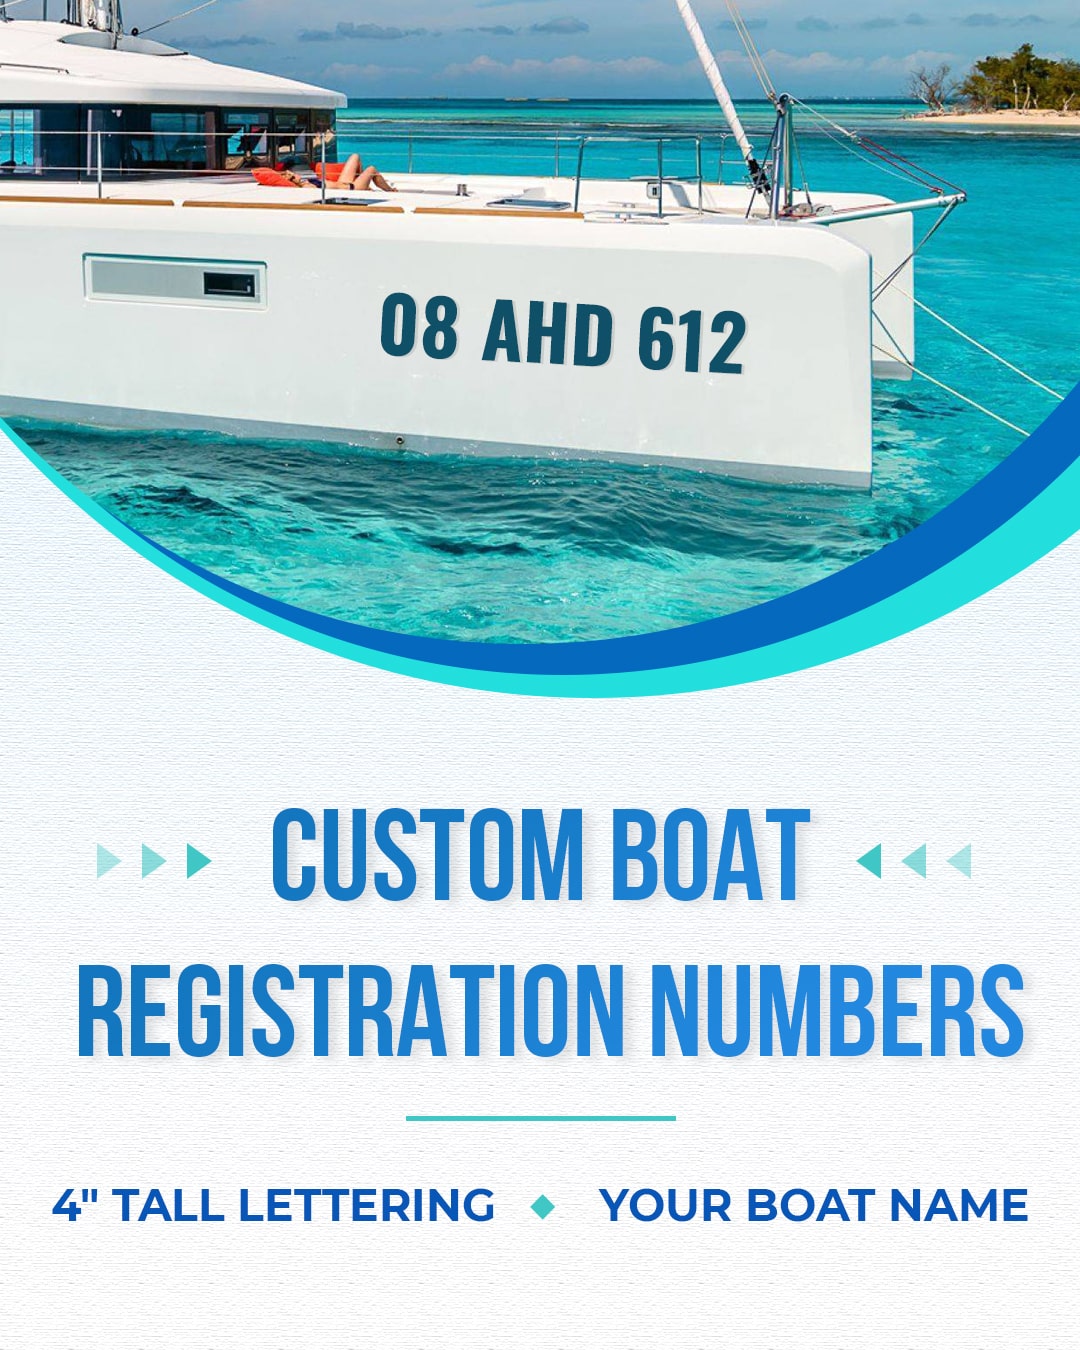 Boat Registration Number Kit Pleasure Craft Lettering Digits Marking Vinyl Decal Sticker